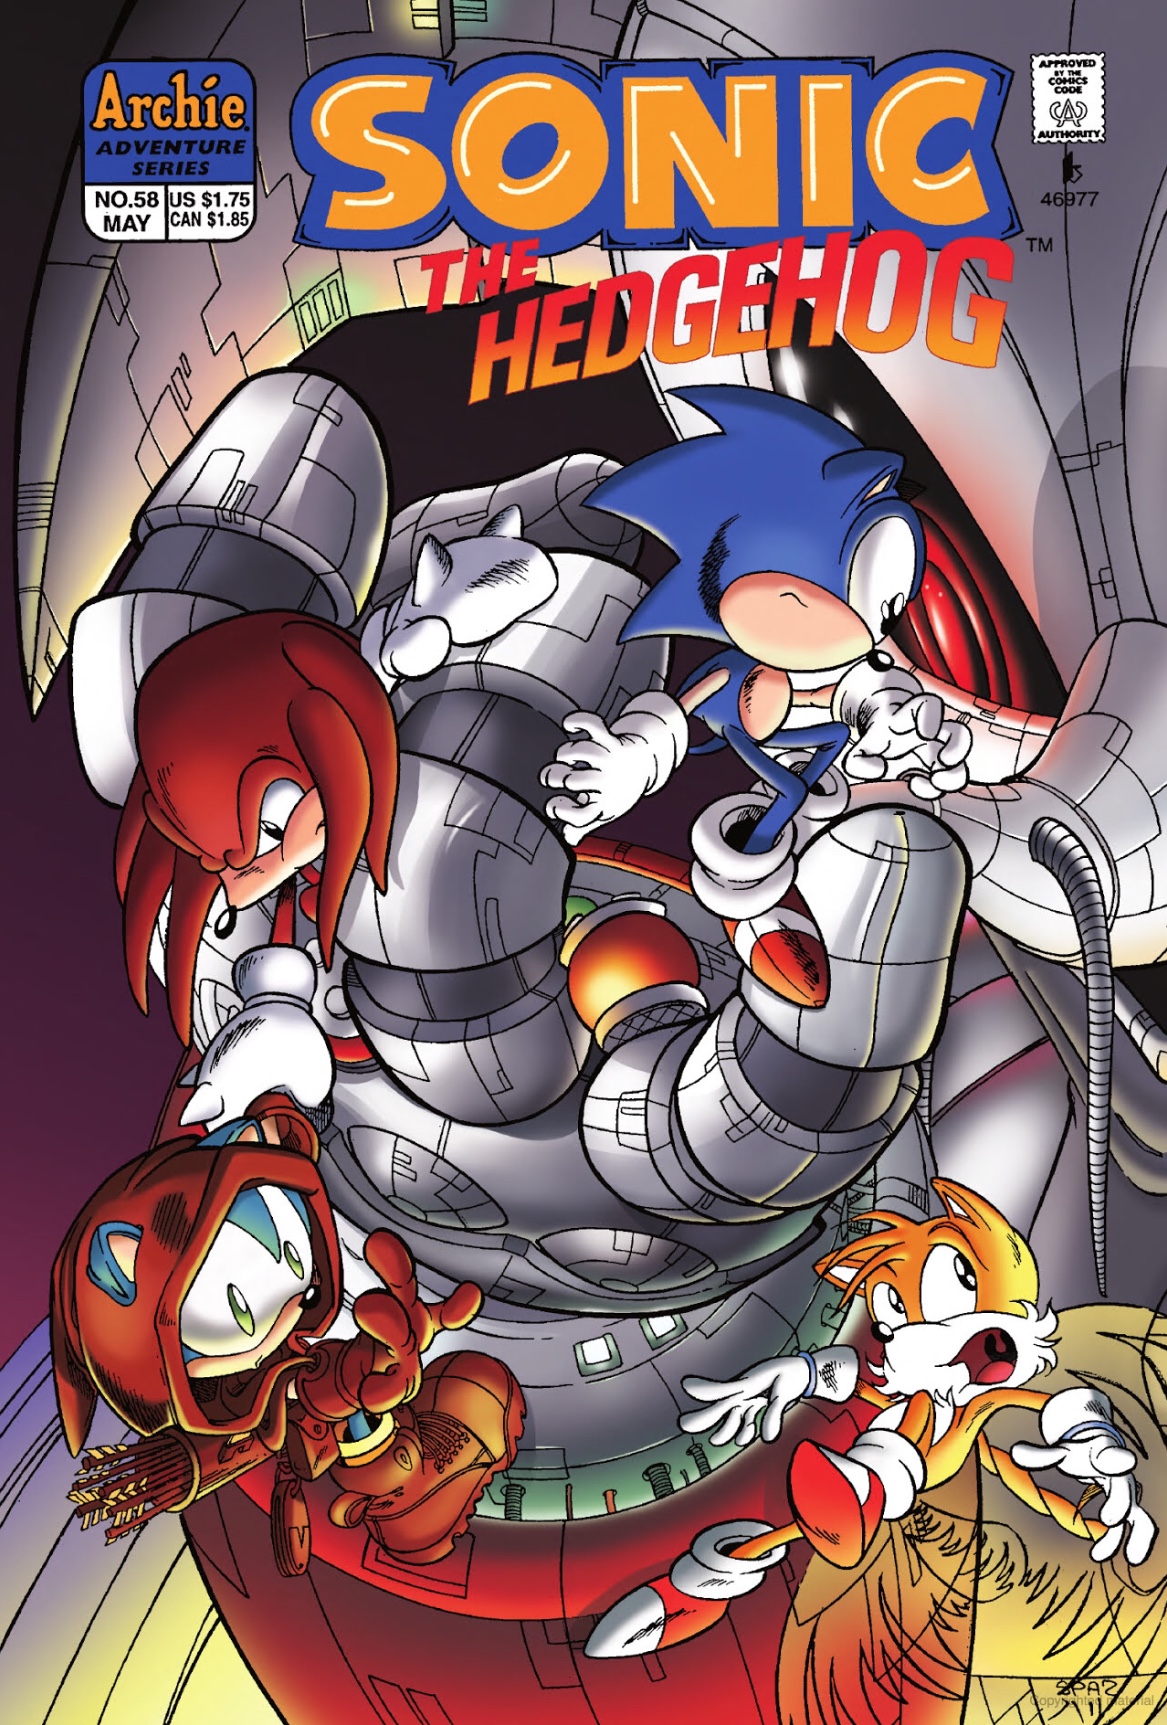 Sonic the hedgehog 242, Wikisonic Wiki